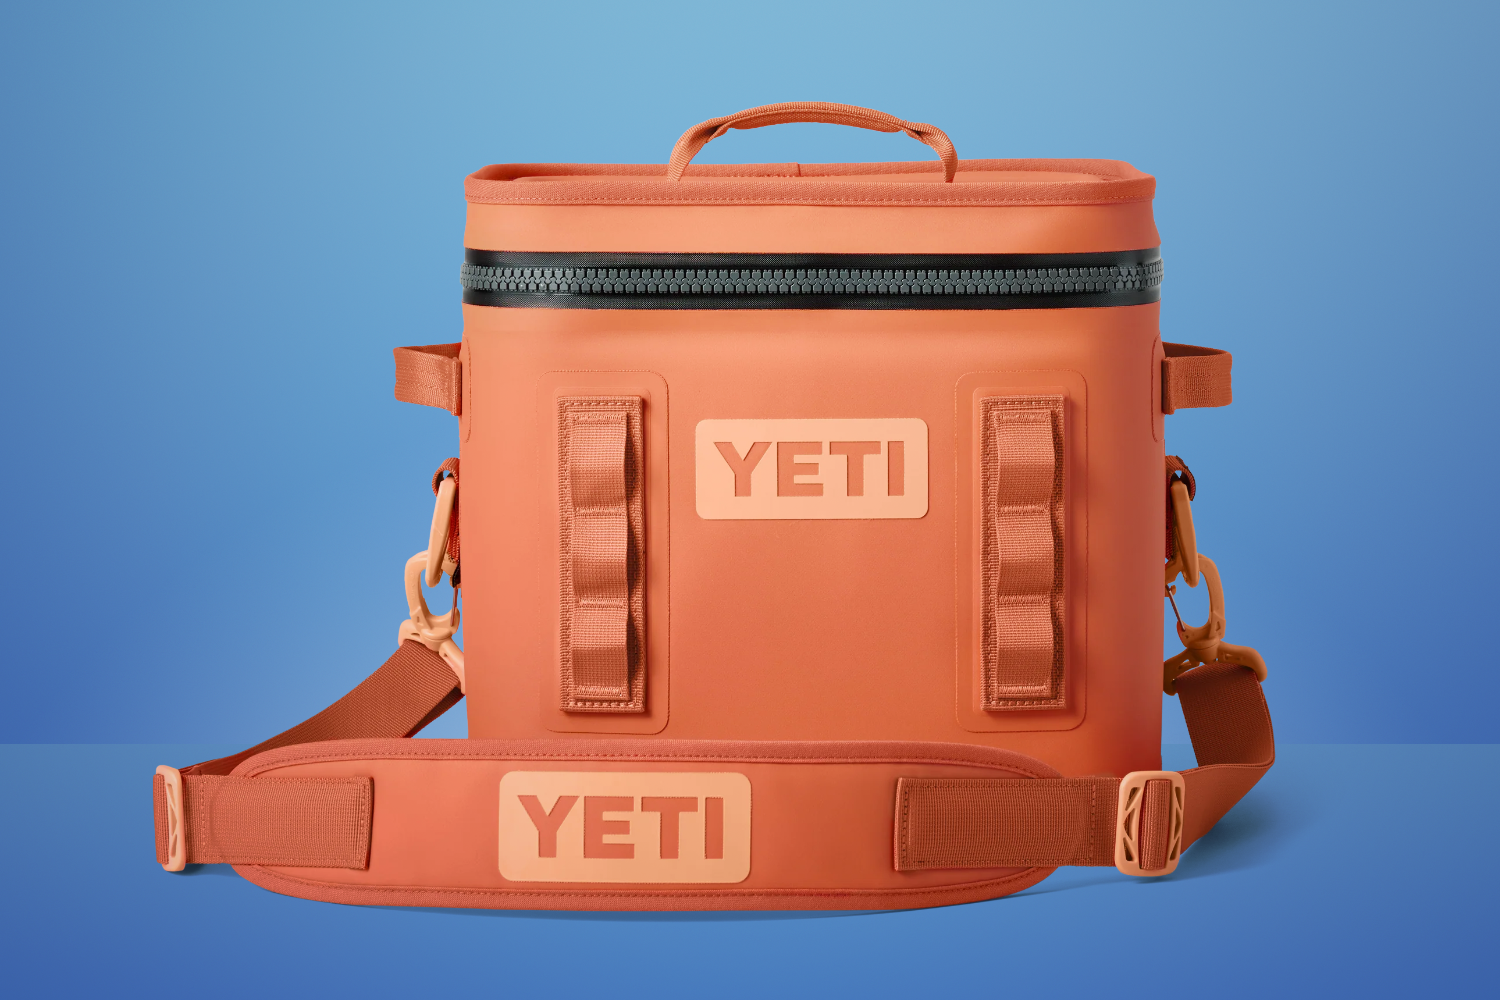 This stylish Yeti cooler sack chills a round's worth of drinks